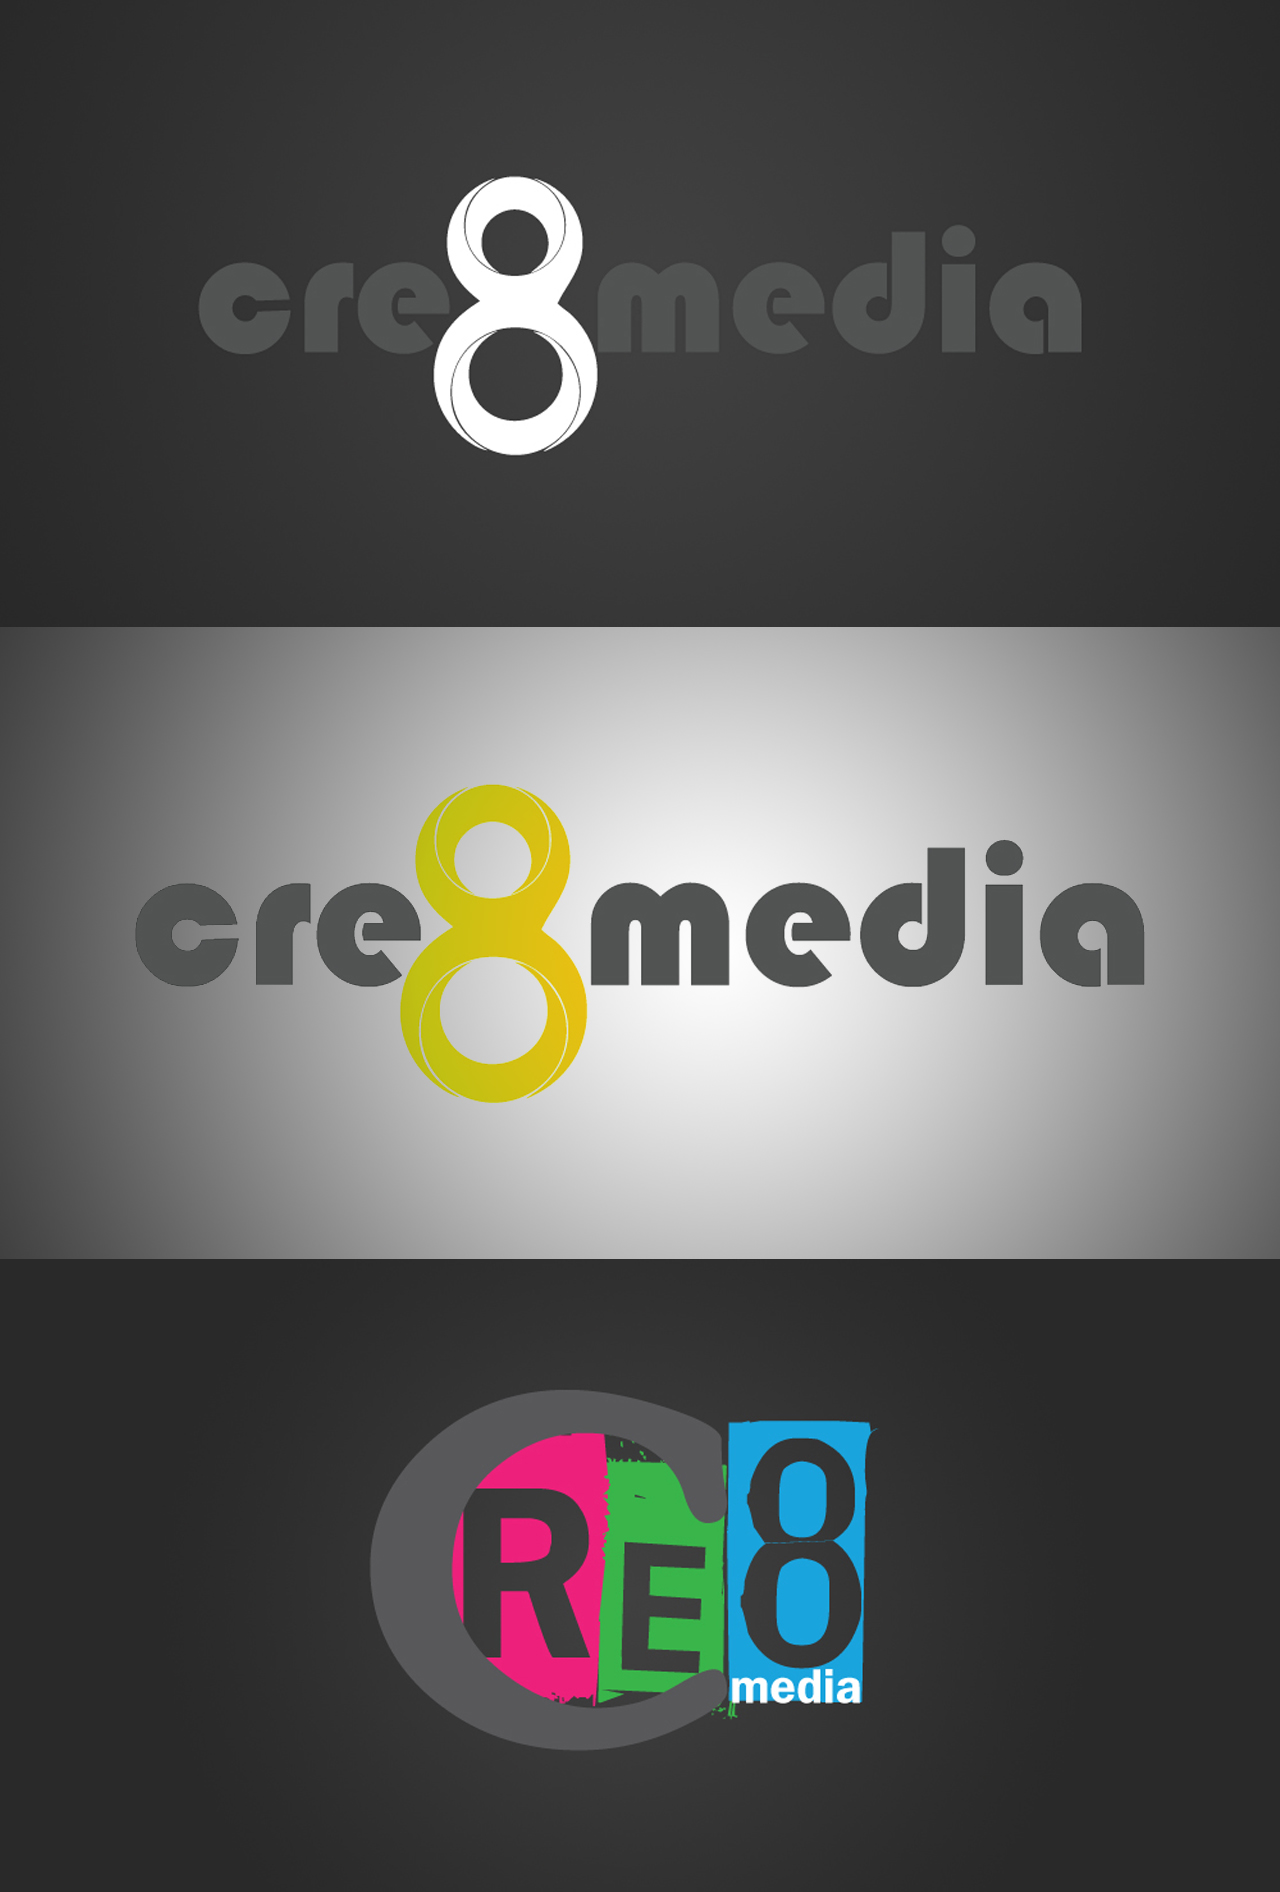 cre8 media Logo designs